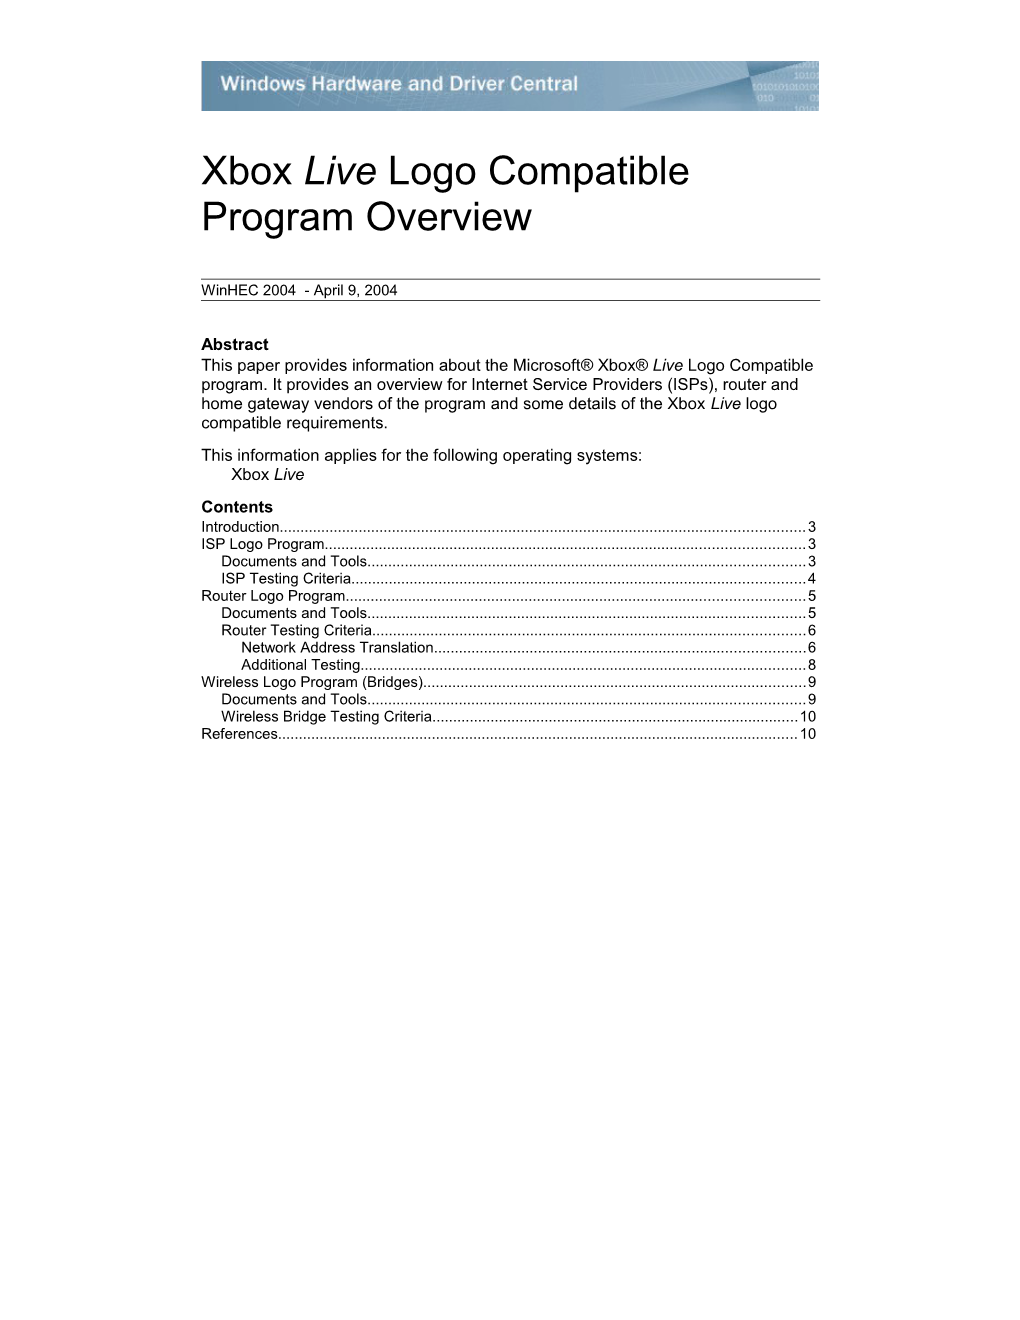 Xbox Live Logo Compatible Program Overview